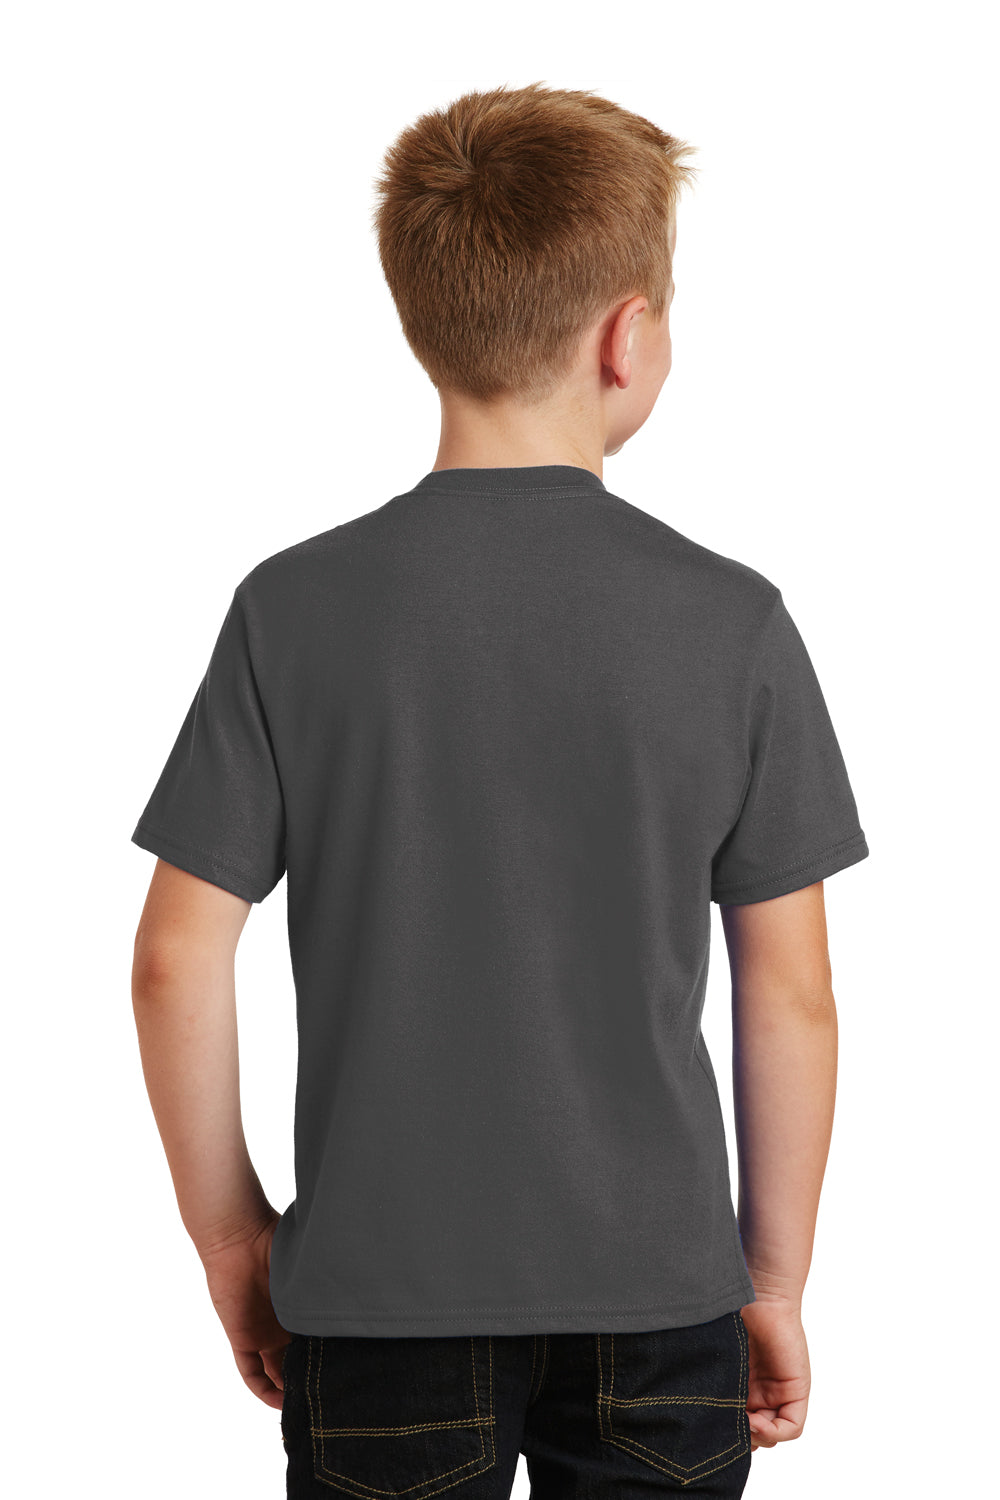 Port & Company PC450Y Youth Fan Favorite Short Sleeve Crewneck T-Shirt Charcoal Grey Back